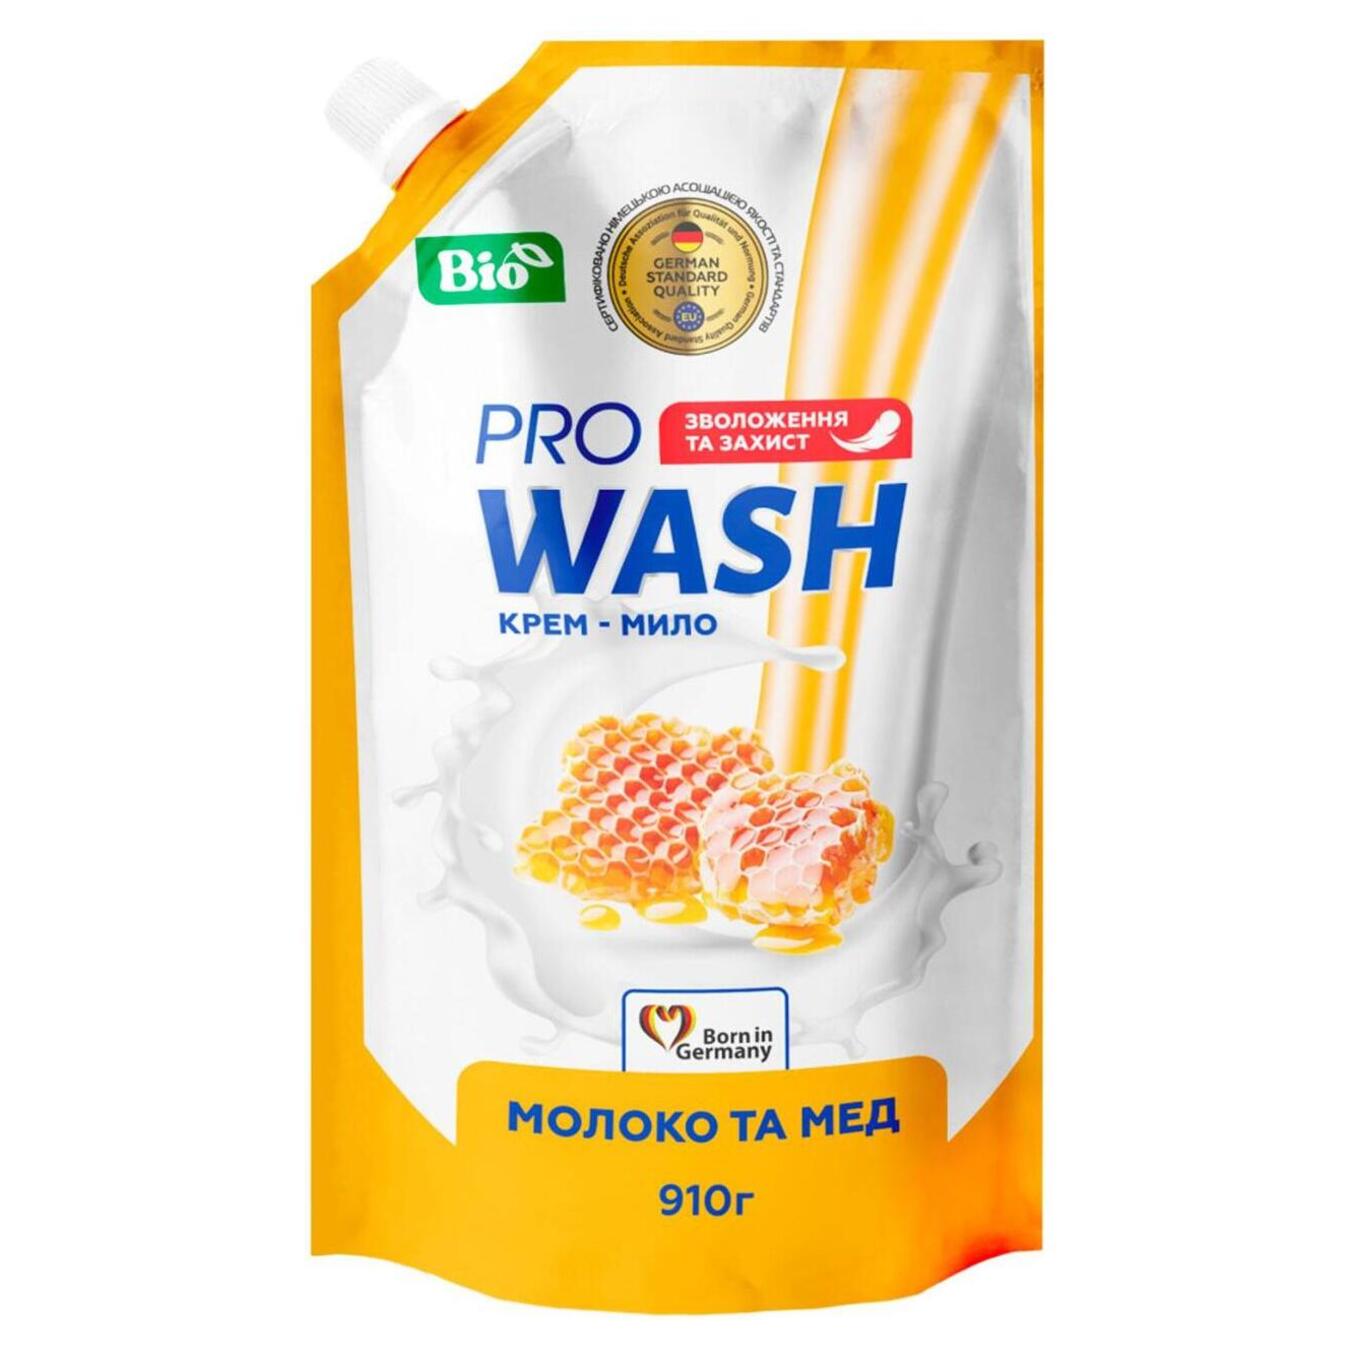 Liquid cream-soap PRO WASH Milk and honey double pack 910g